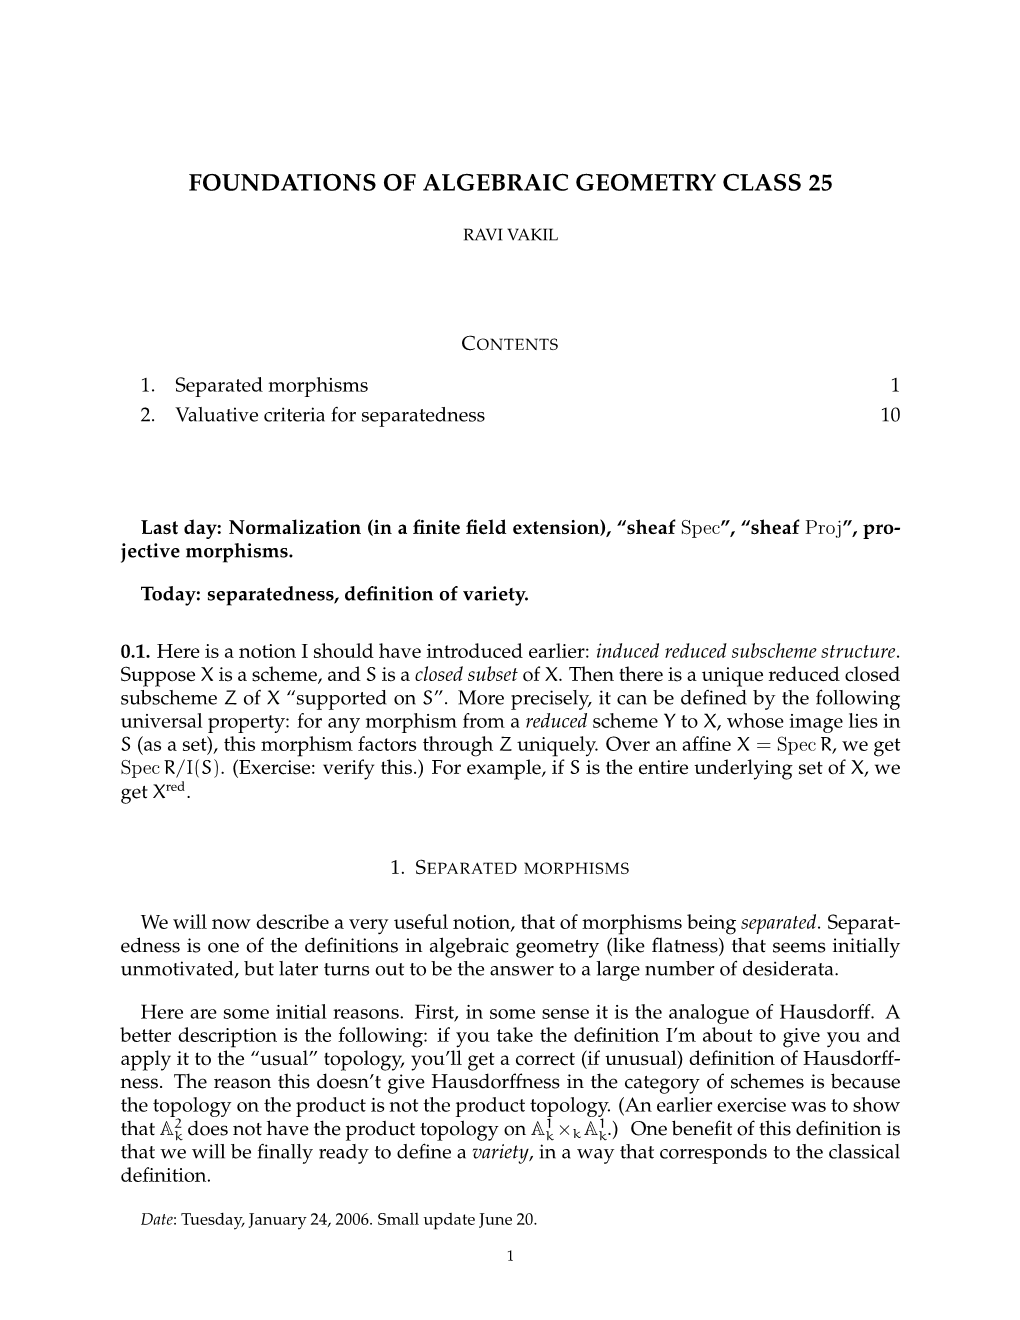 Foundations of Algebraic Geometry Class 25